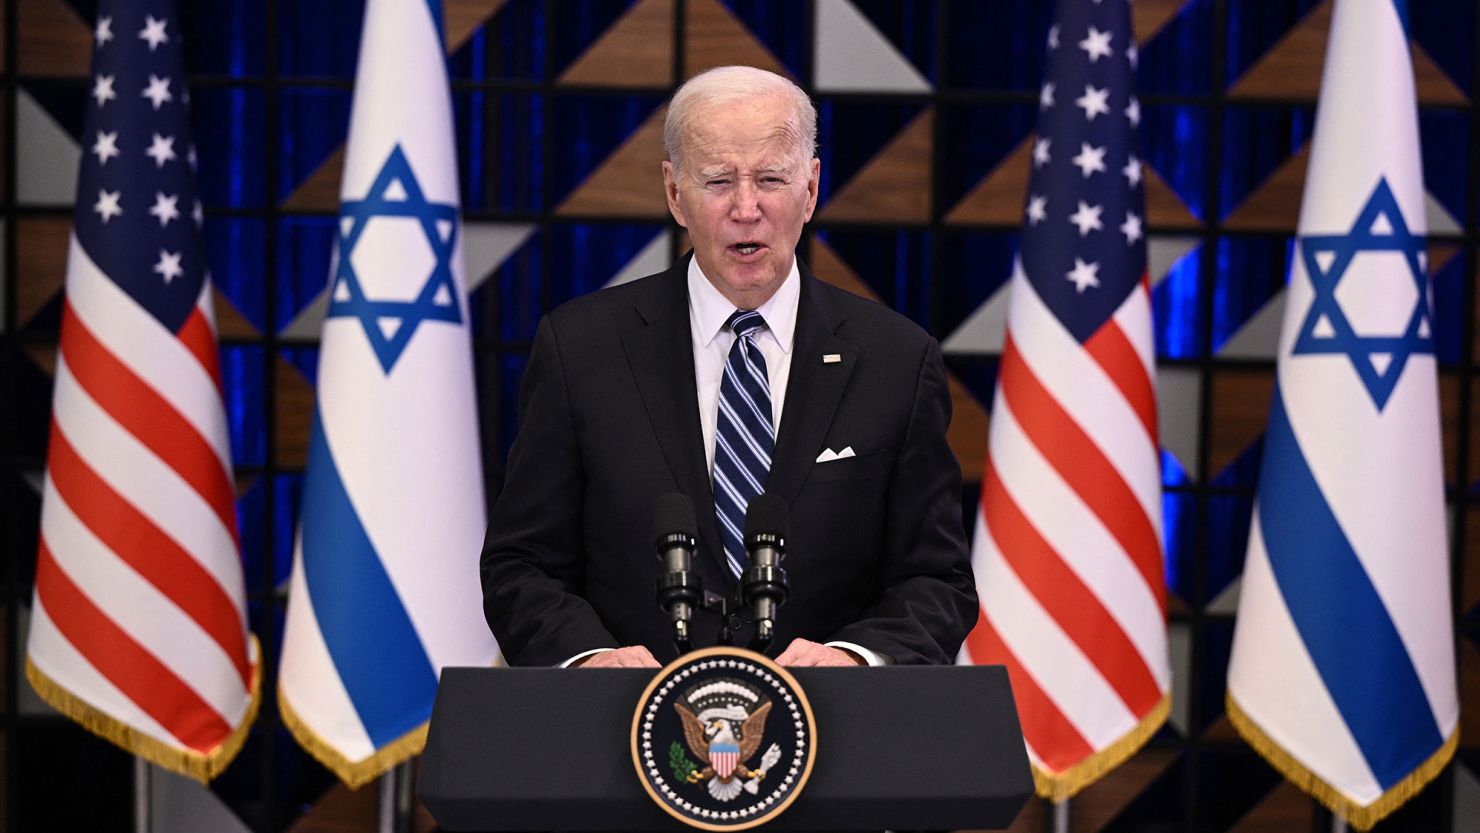 Biden expresses hope for ceasefire, signaling progress in Israel-Hamas talks (Credits: CNN)